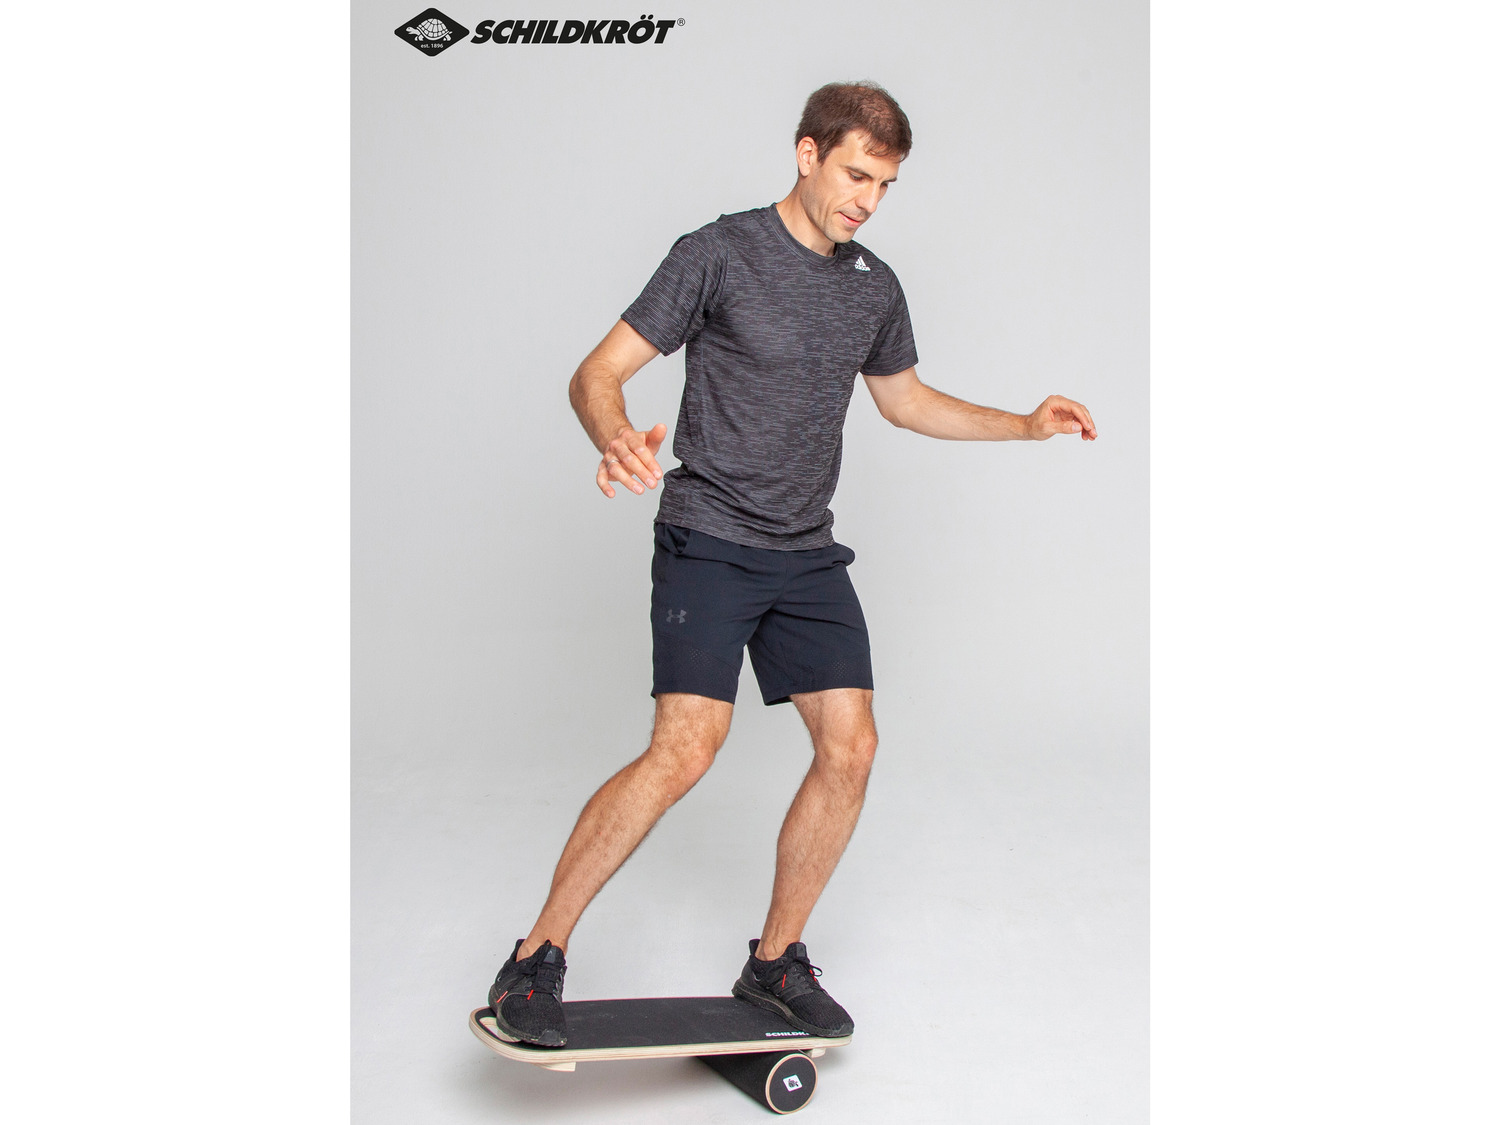 Schildkröt Fitness Wooden Board Balance | LIDL